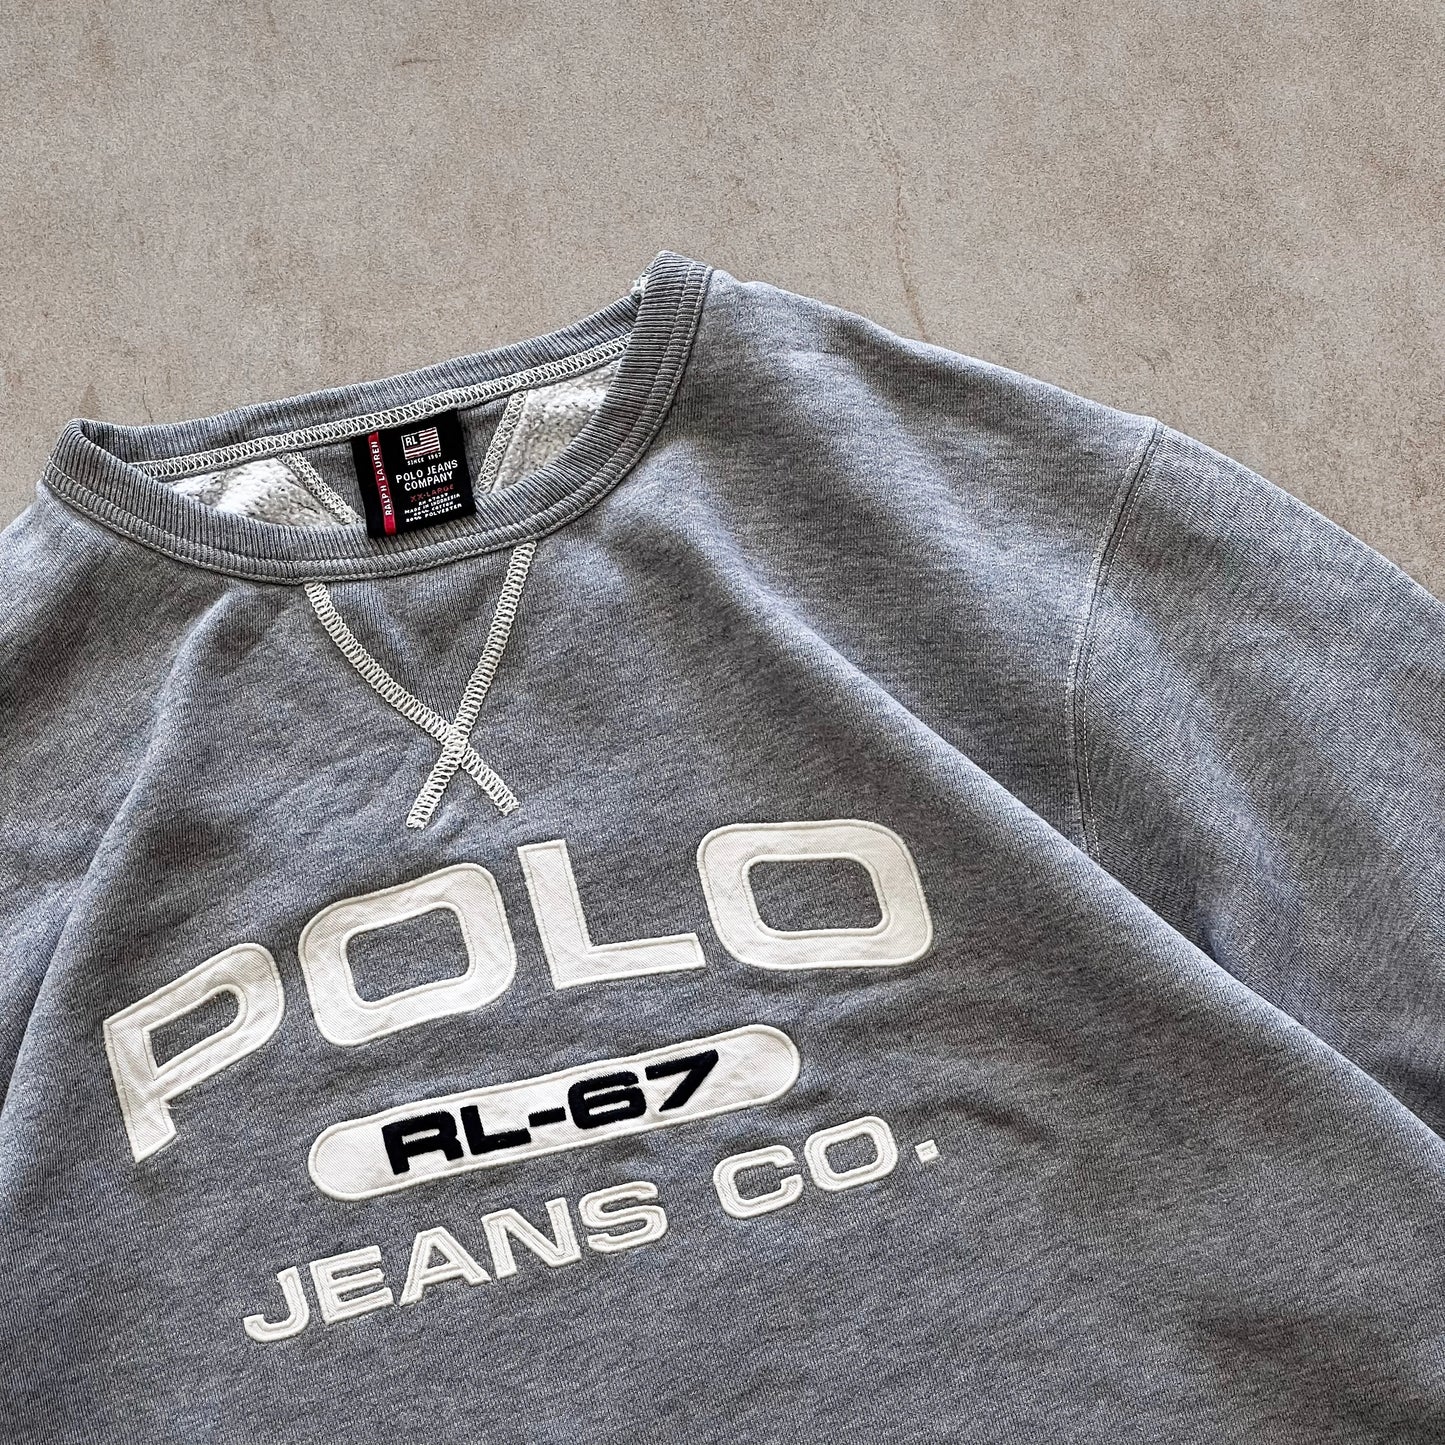 Polo-Jeans-Company-RL-67-Grey-Sweater-2XL-sullivansvintage